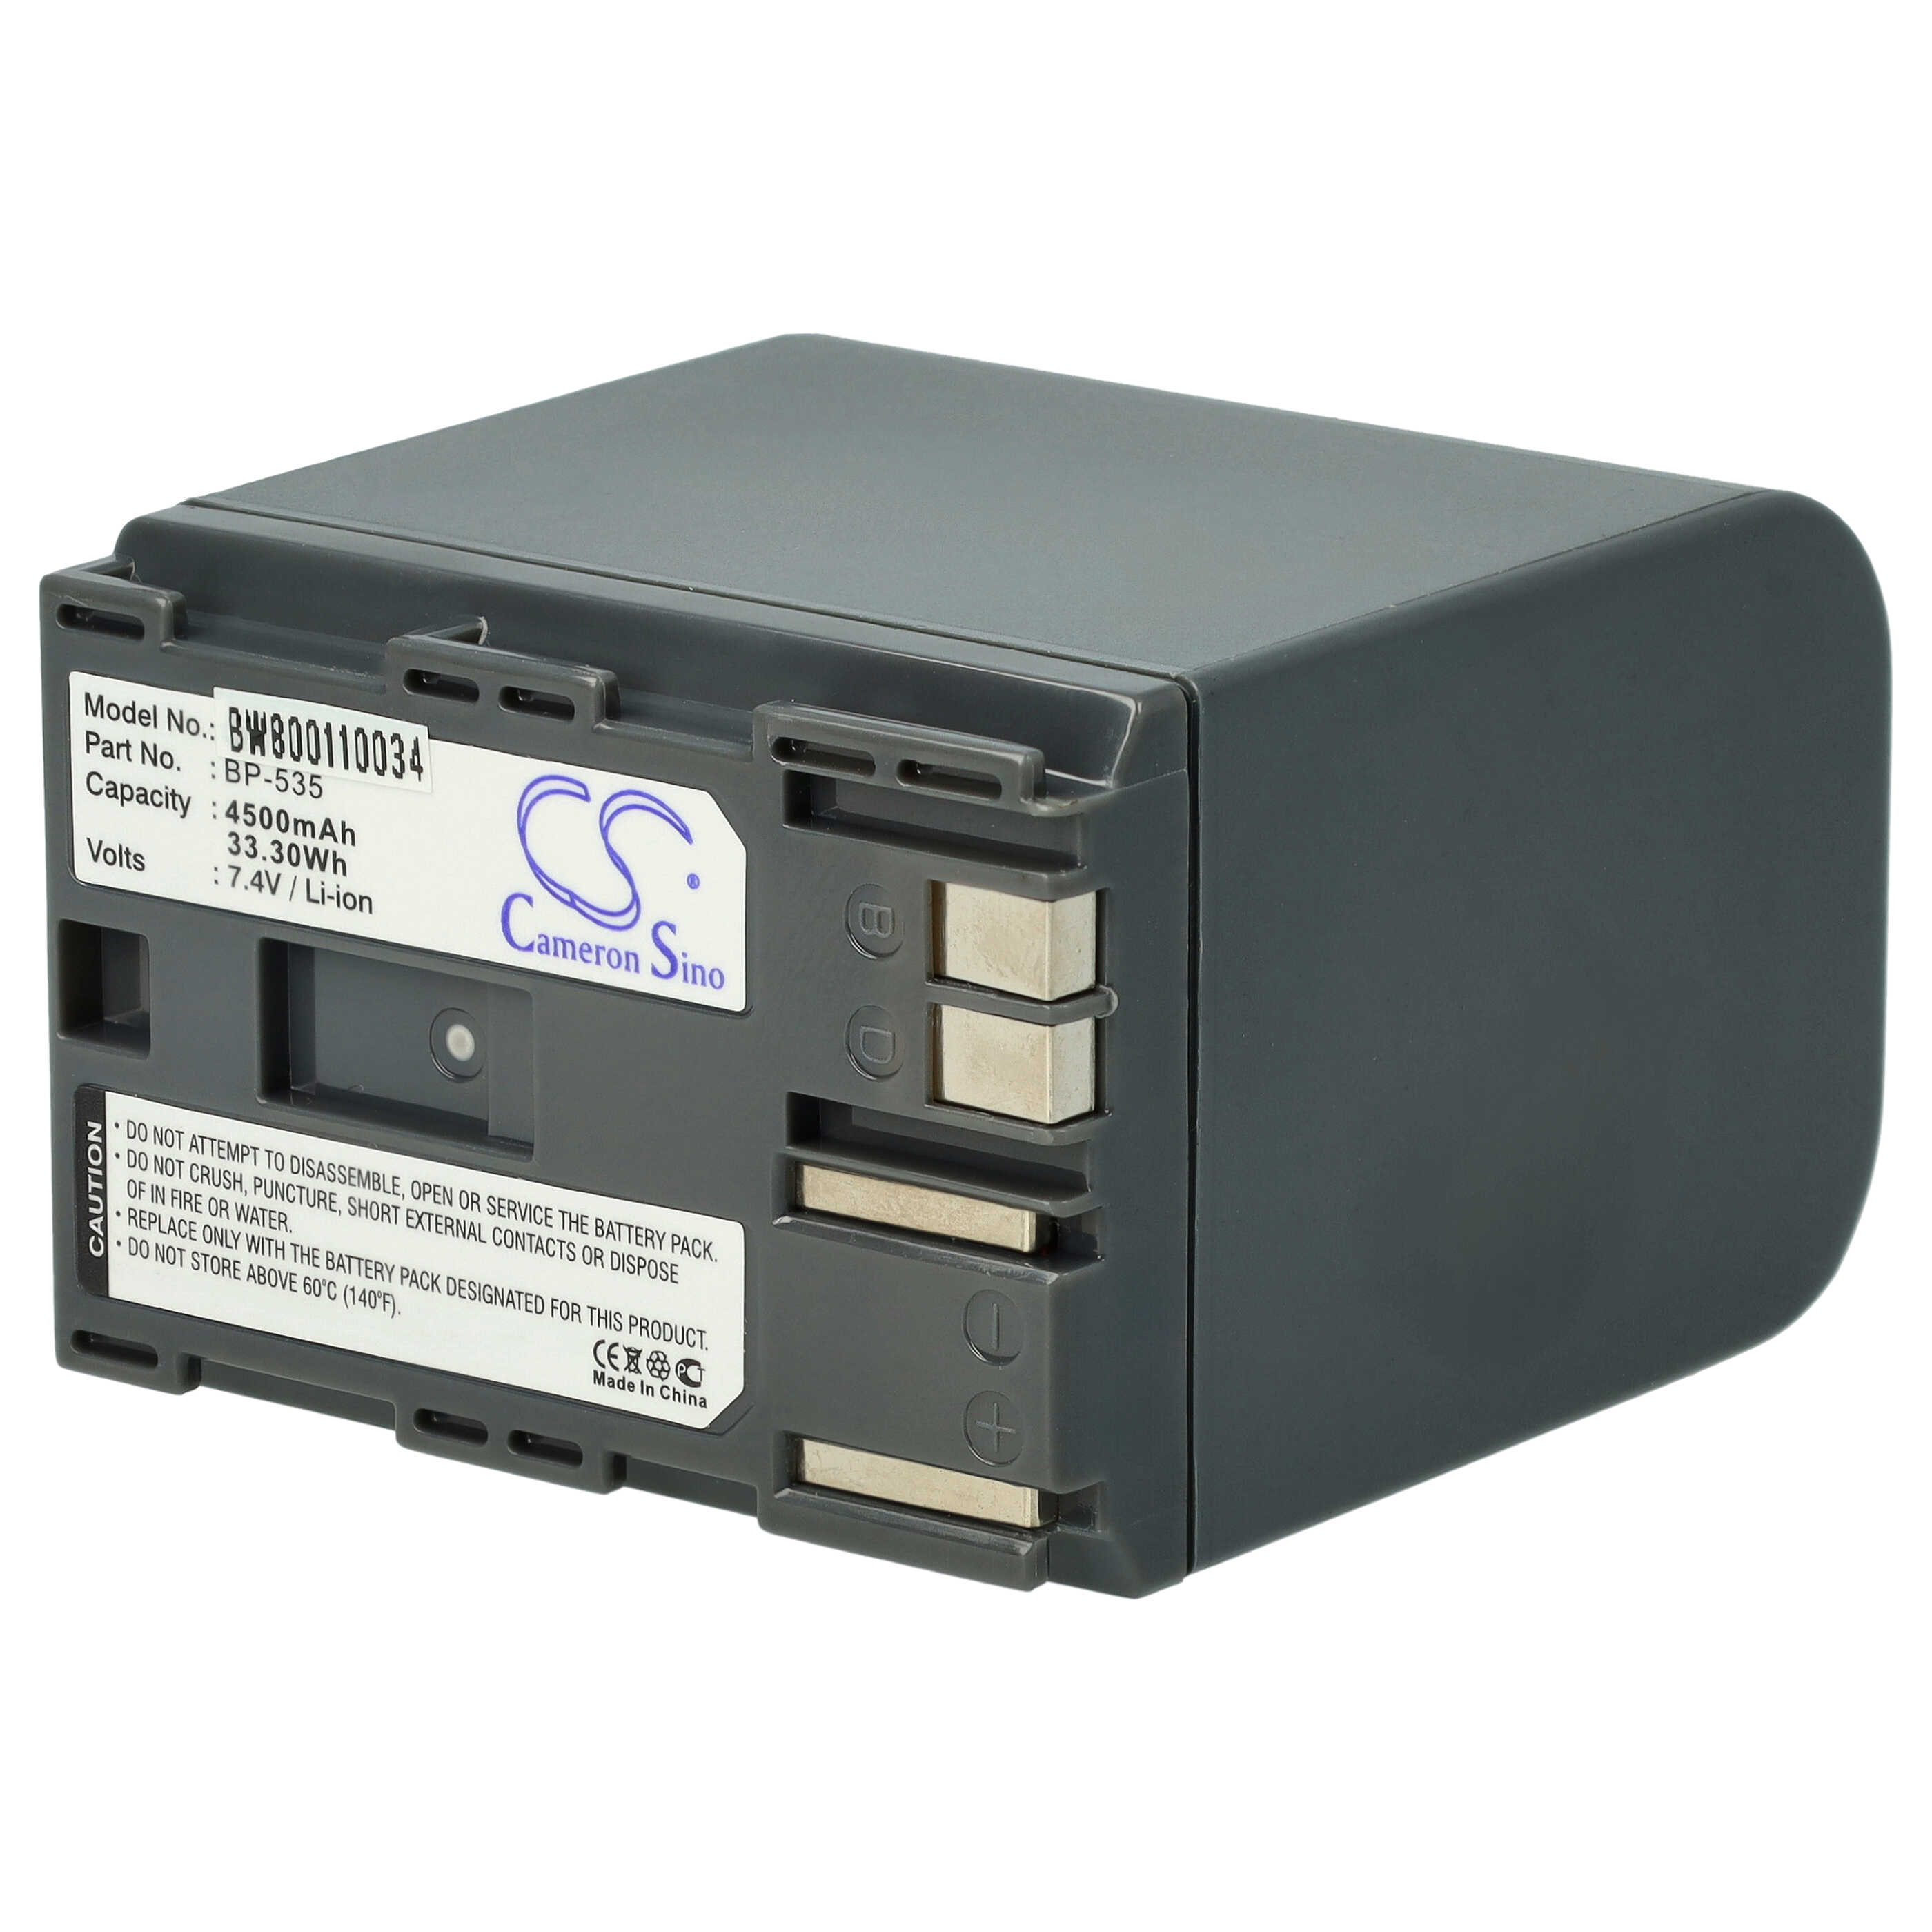 Akumulator do kamery cyfrowej / wideo zamiennik Canon BP-535 - 4500 mAh 7,4 V Li-Ion